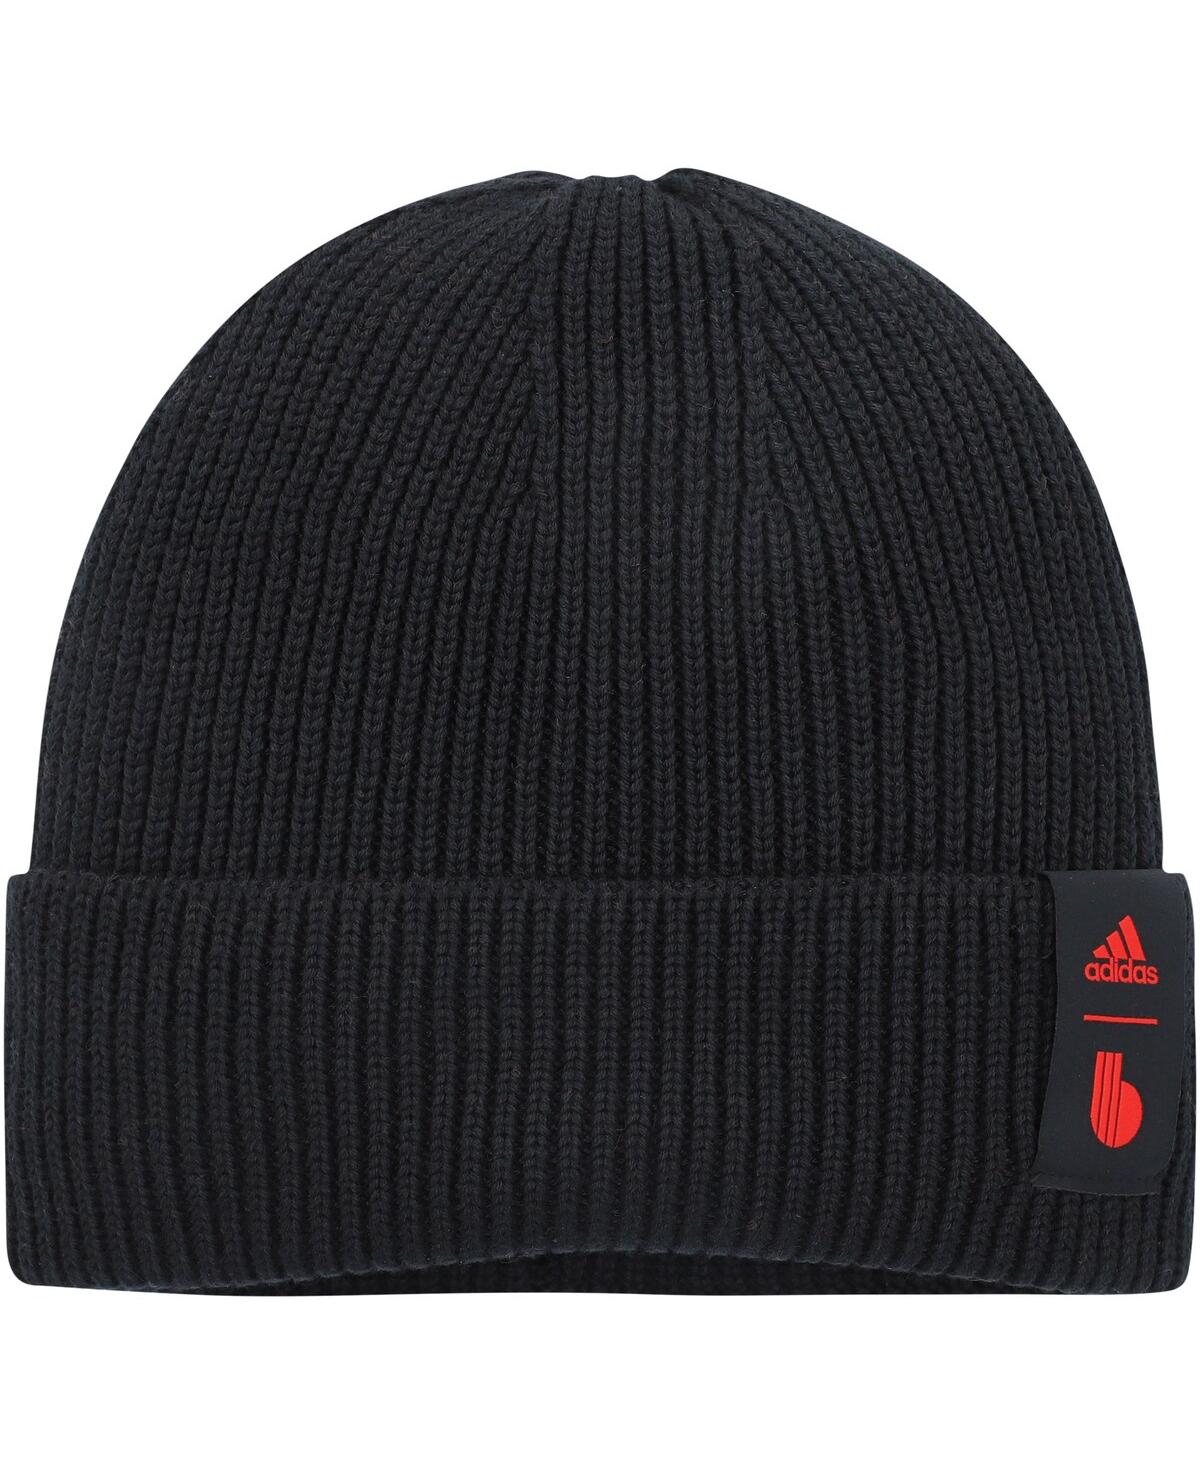 Shop Adidas Originals Men's Adidas Black Belgium National Team Woolie Cuffed Knit Hat